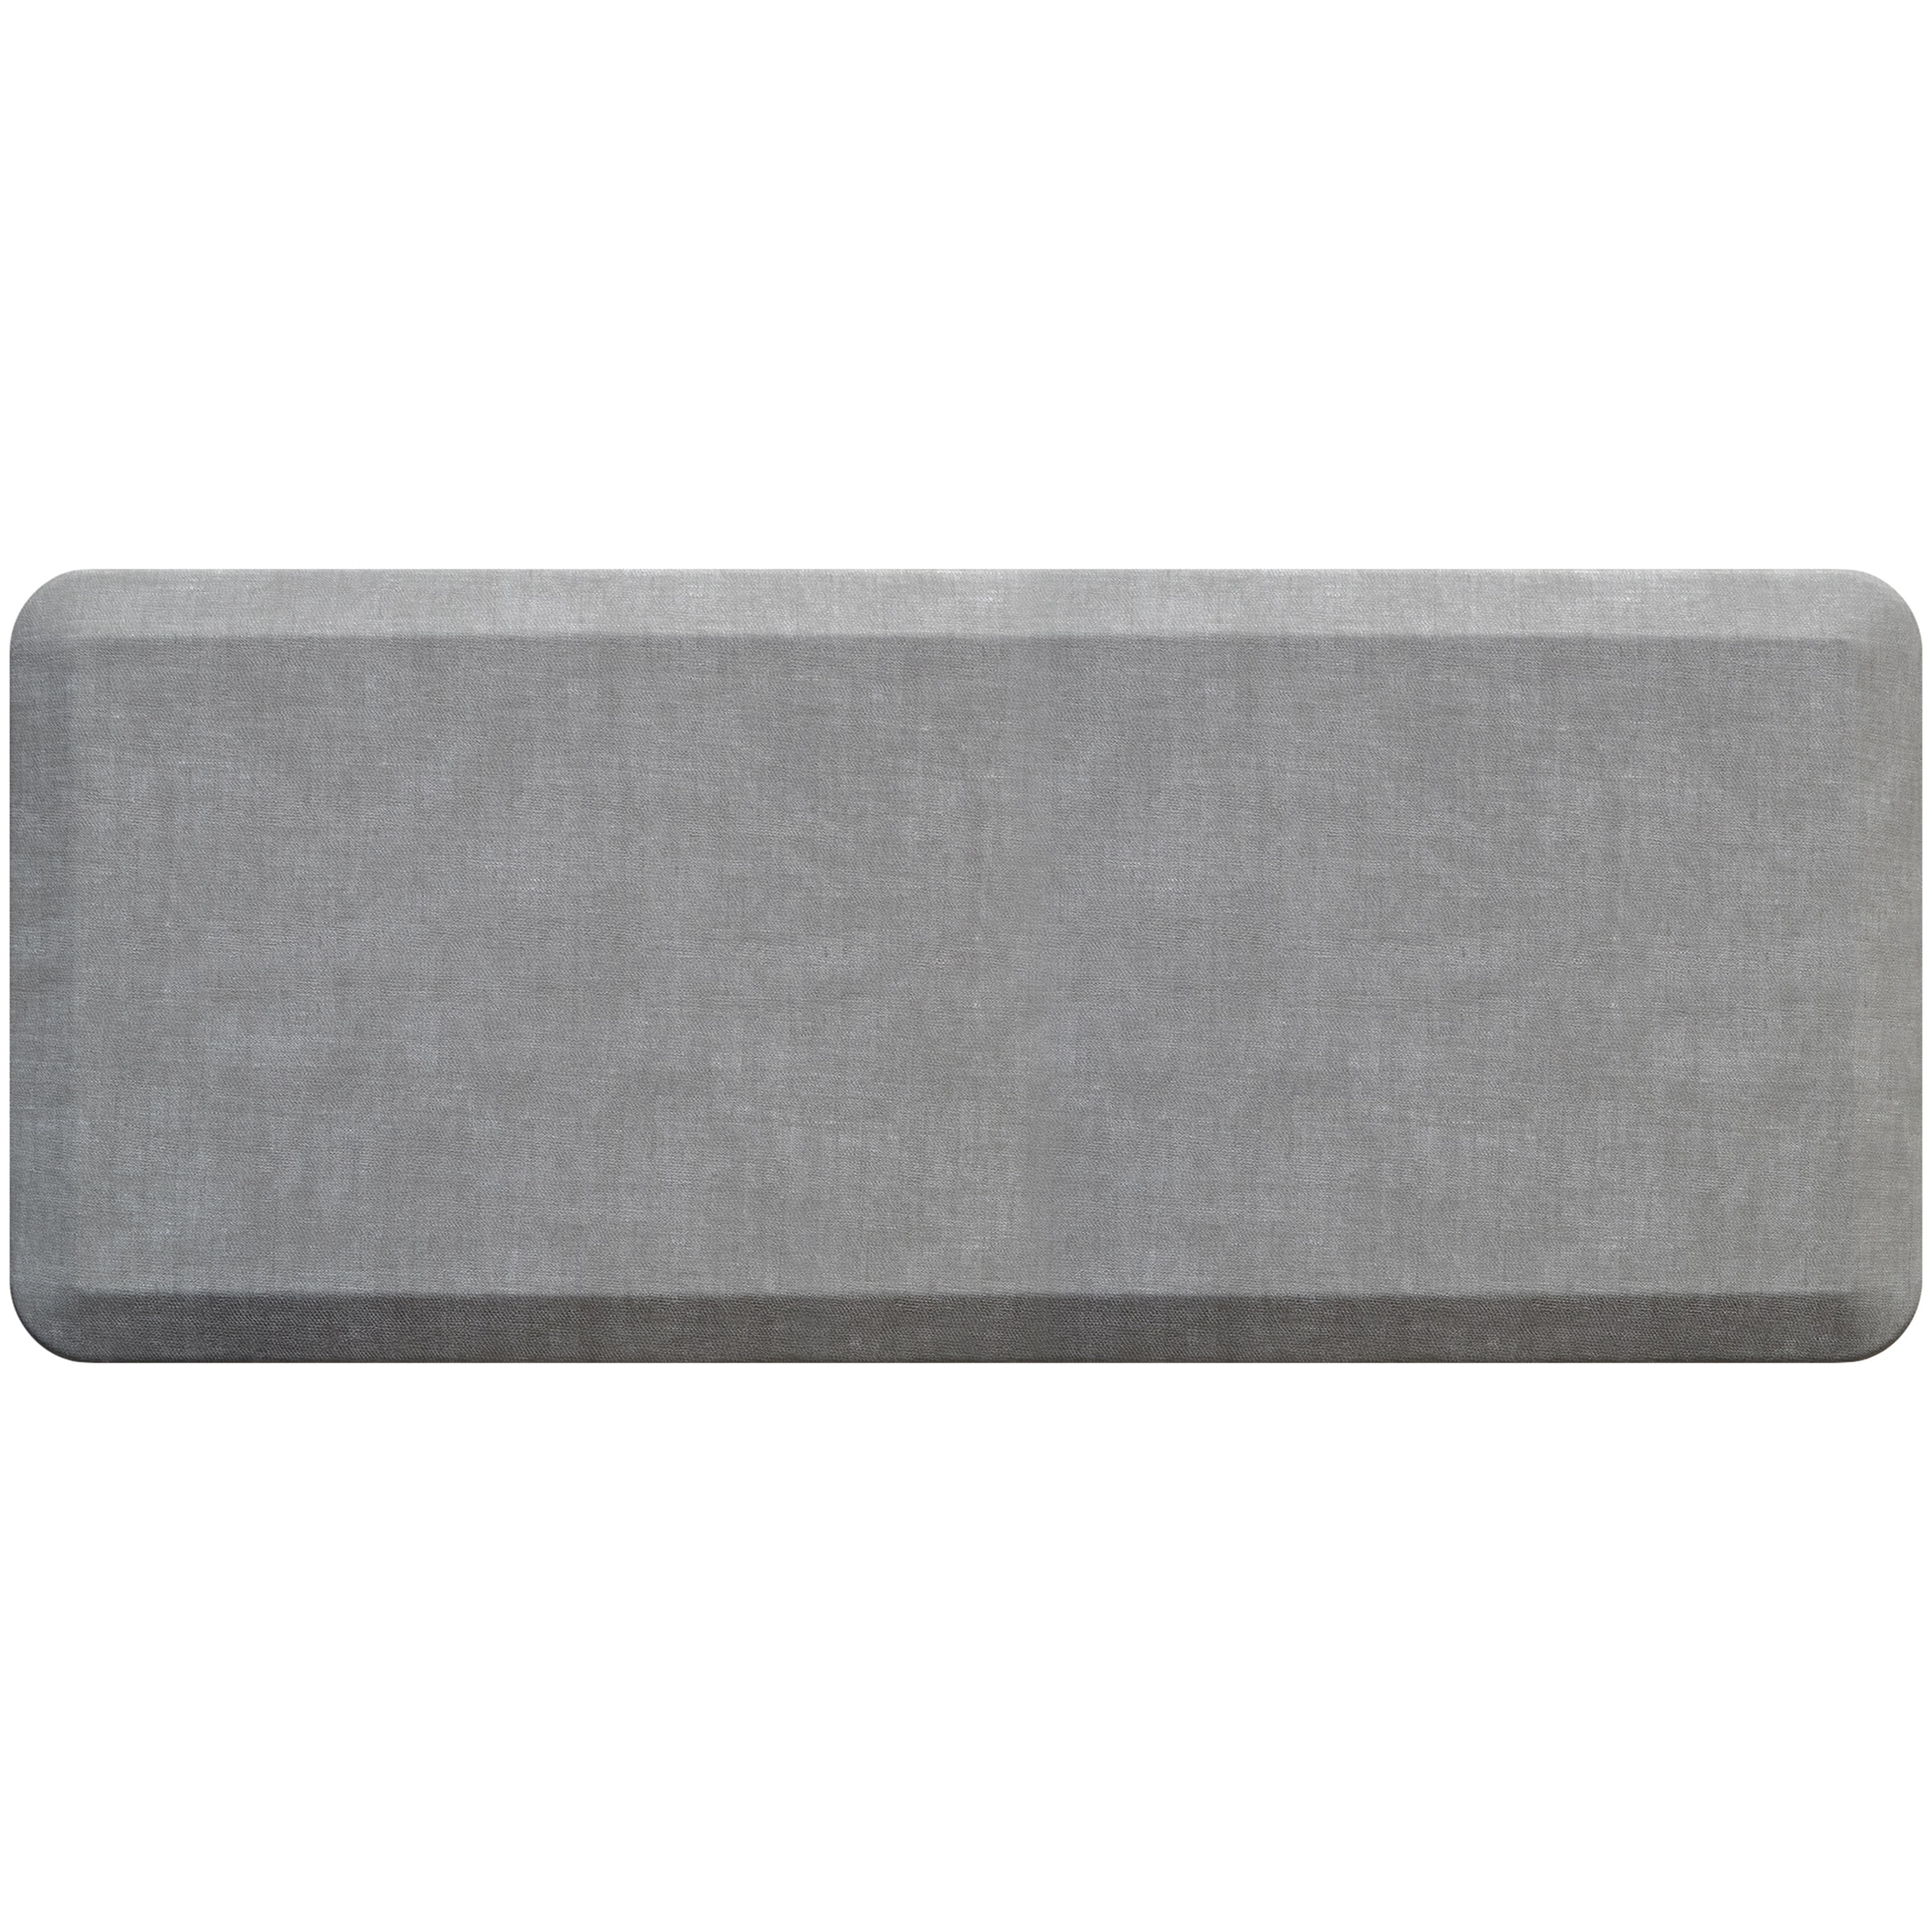 Gel Anti-Fatigue Mat GelPro Color: Light Gray